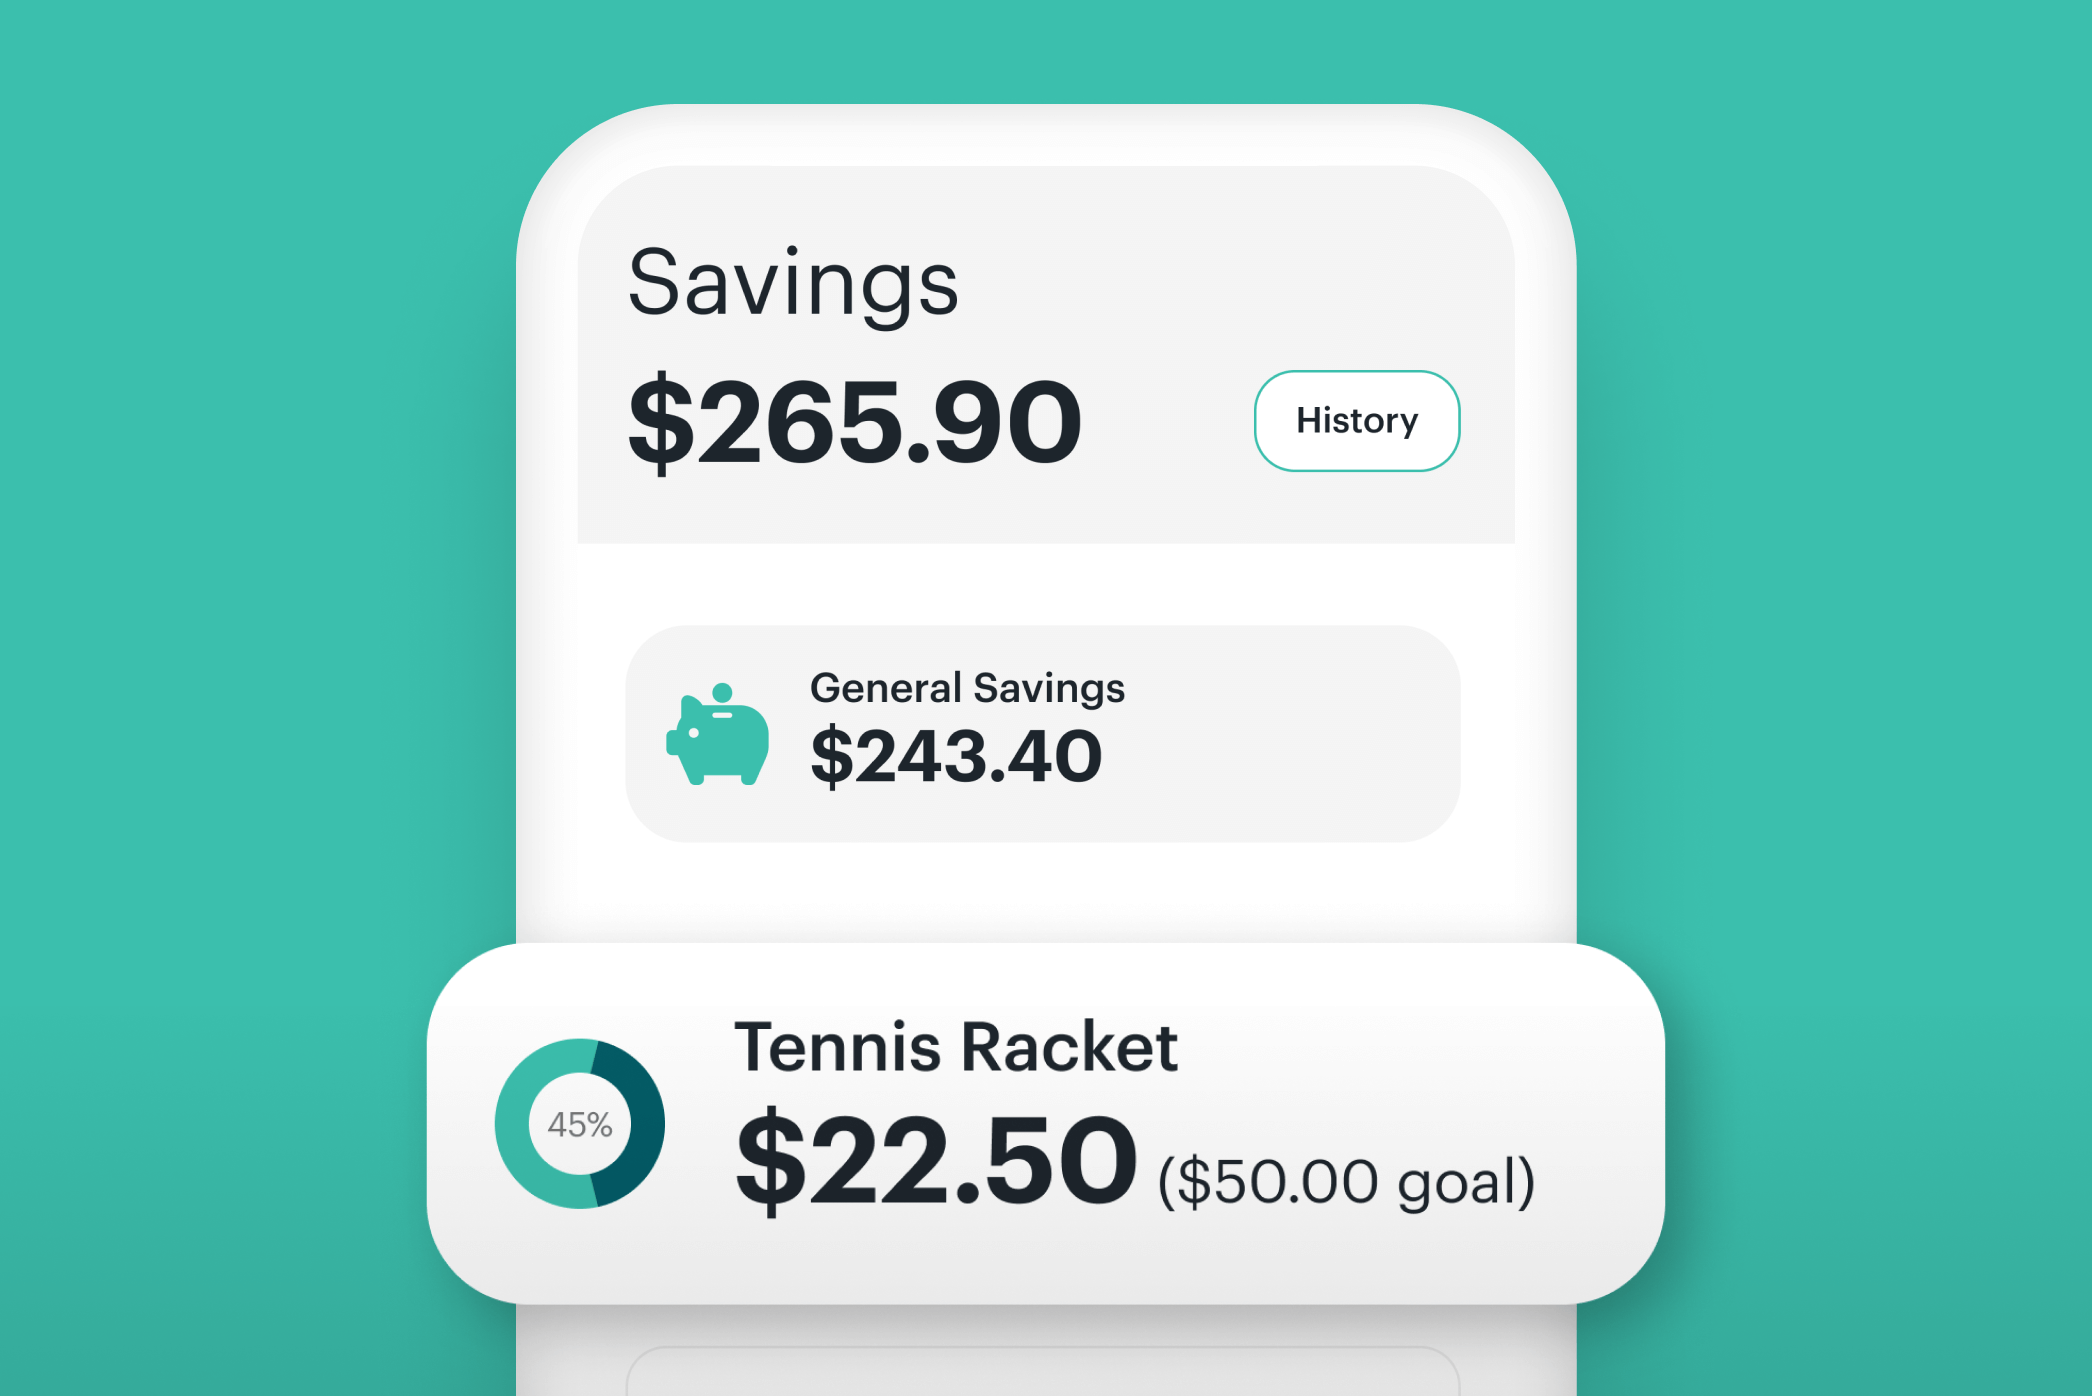 screenshot of savings goal (tennis racket)